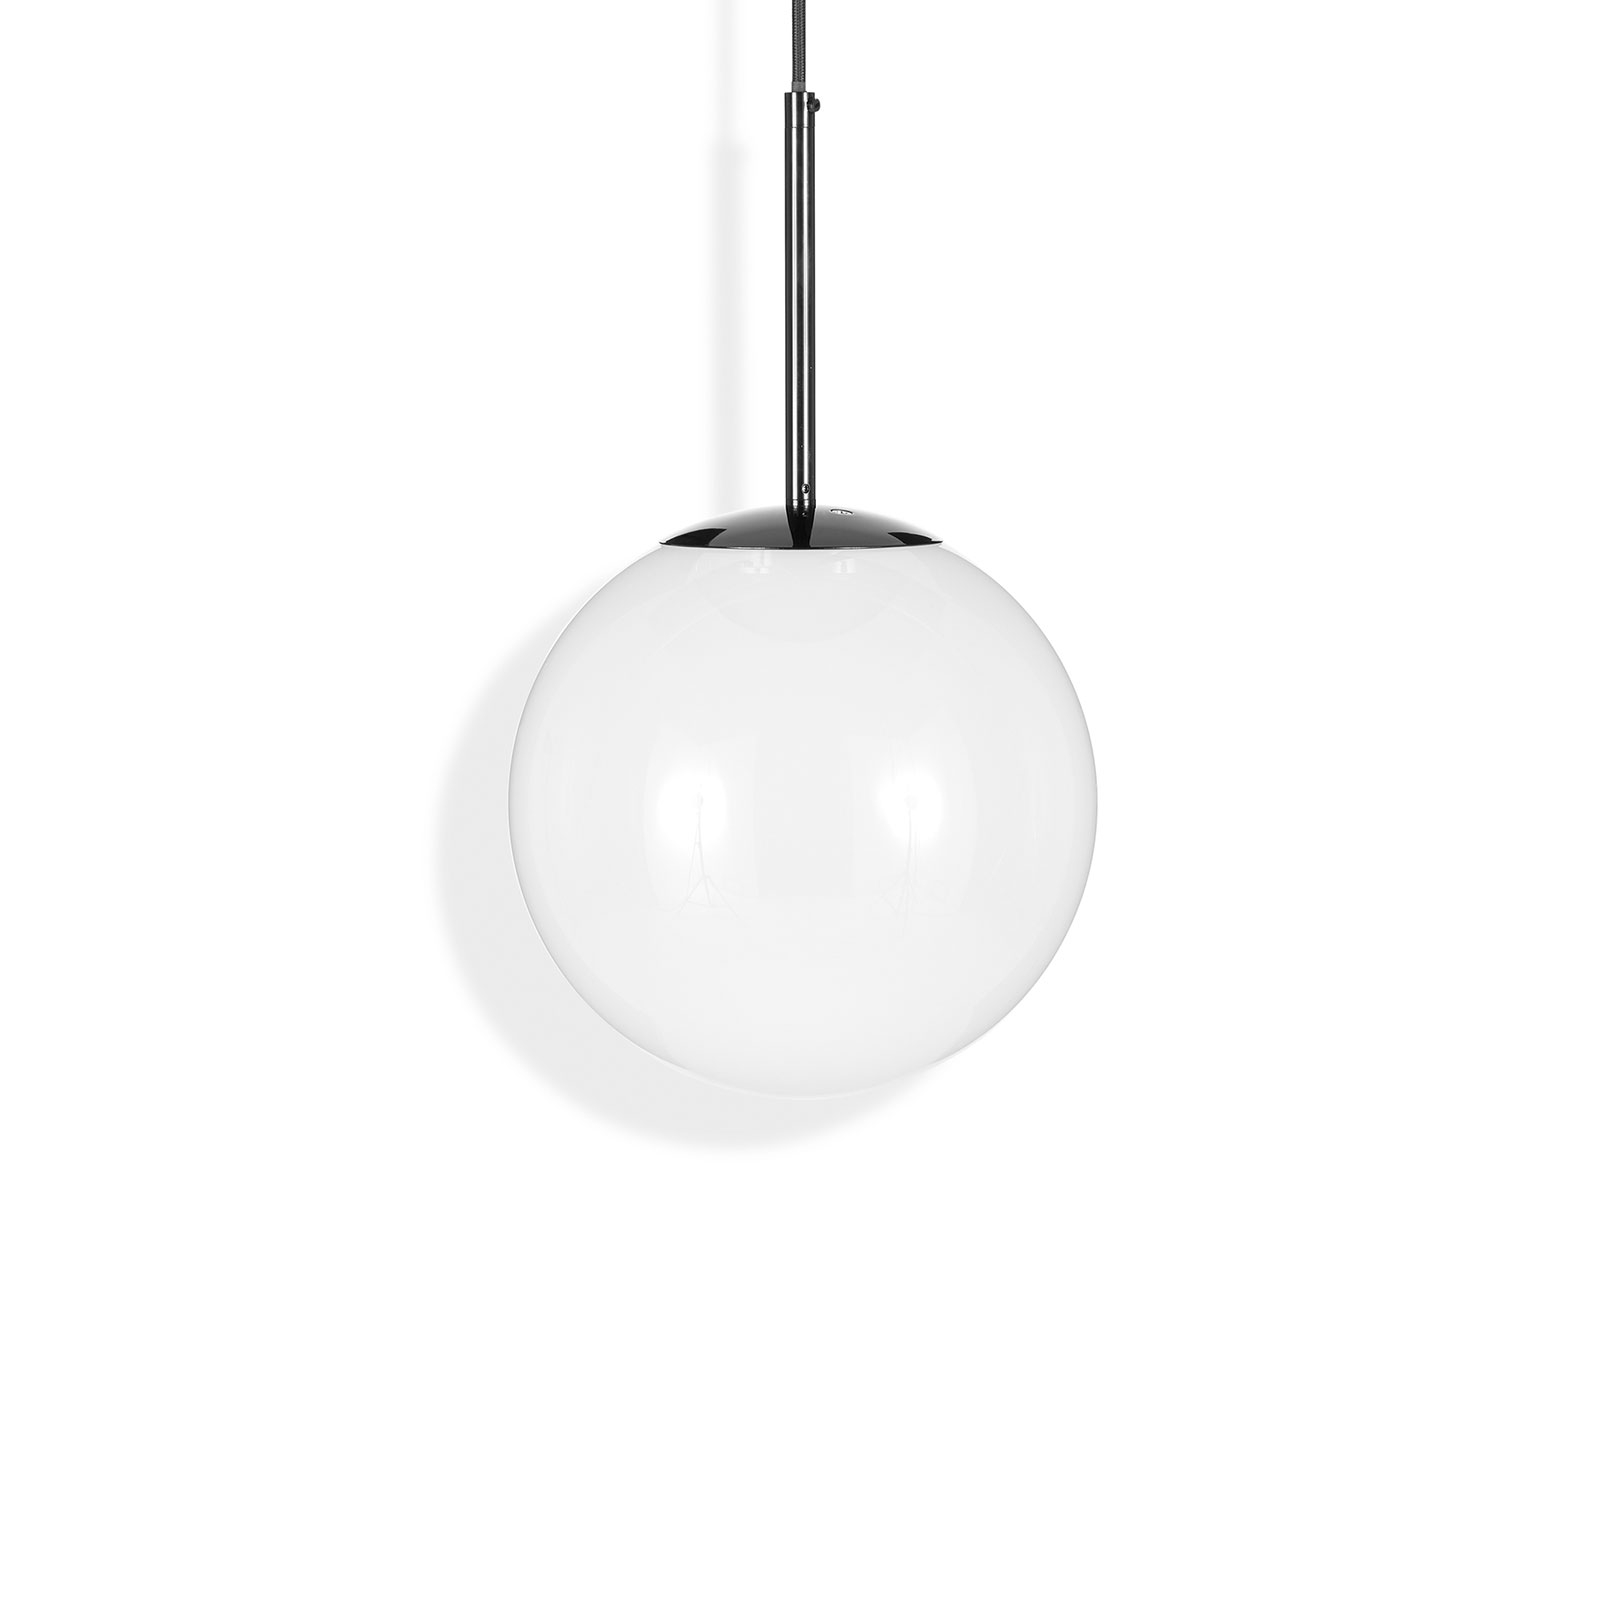 Tom Dixon Globe bol-LED hanglamp, Ø 25 cm